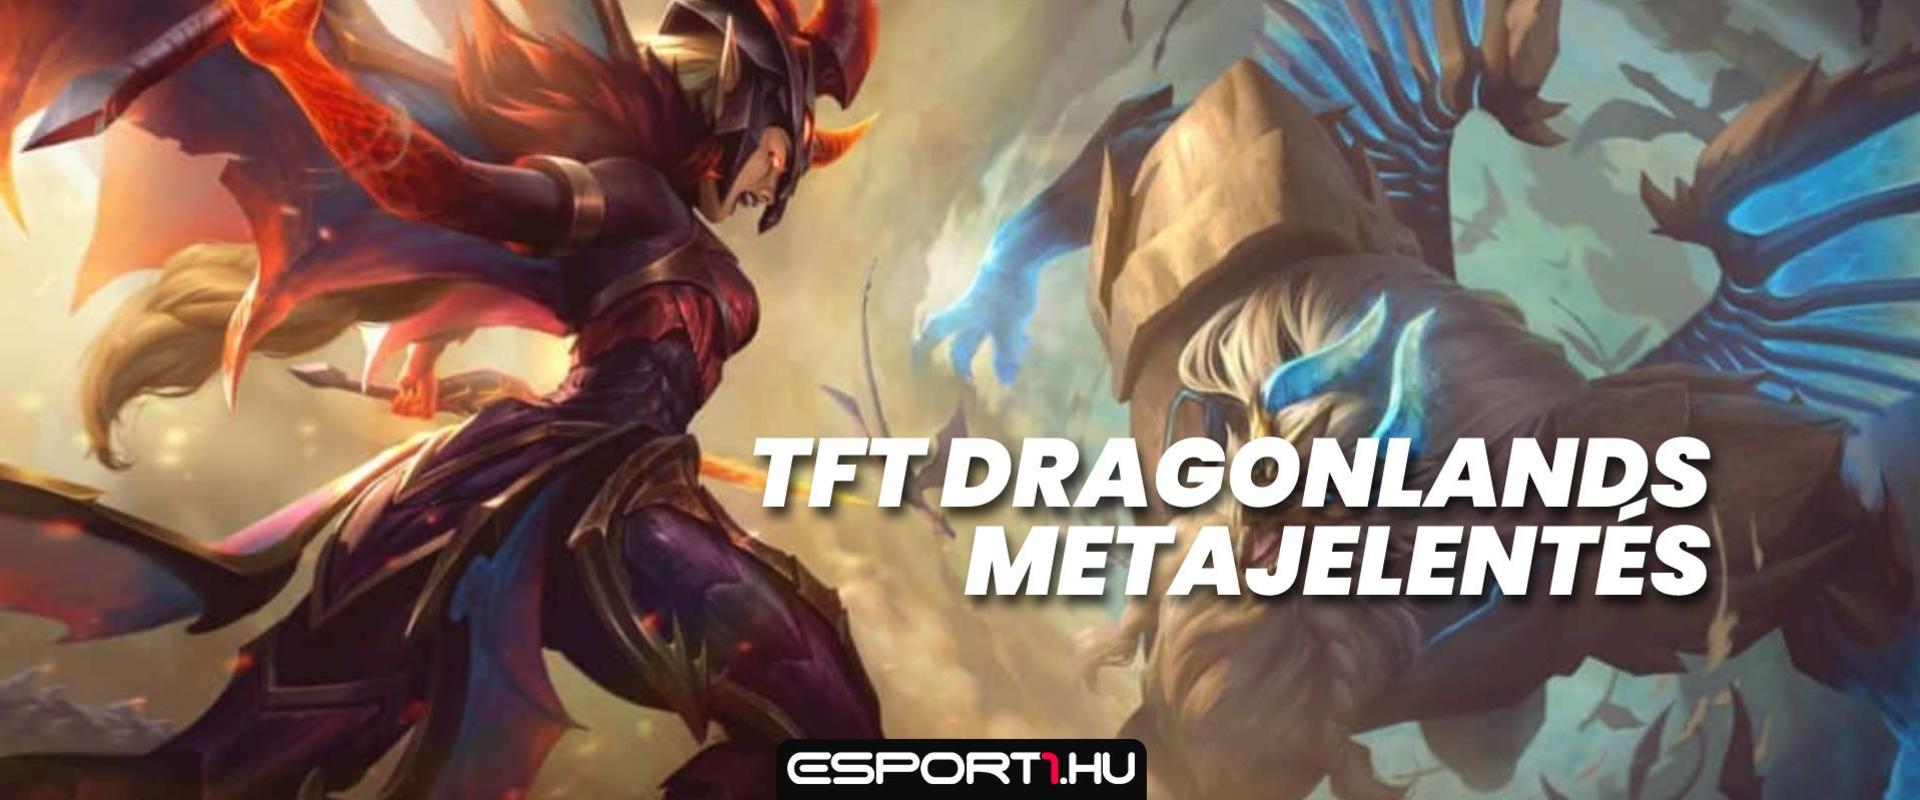 Teamfight Tactics metajelentés - Dragonlands kompozíciók